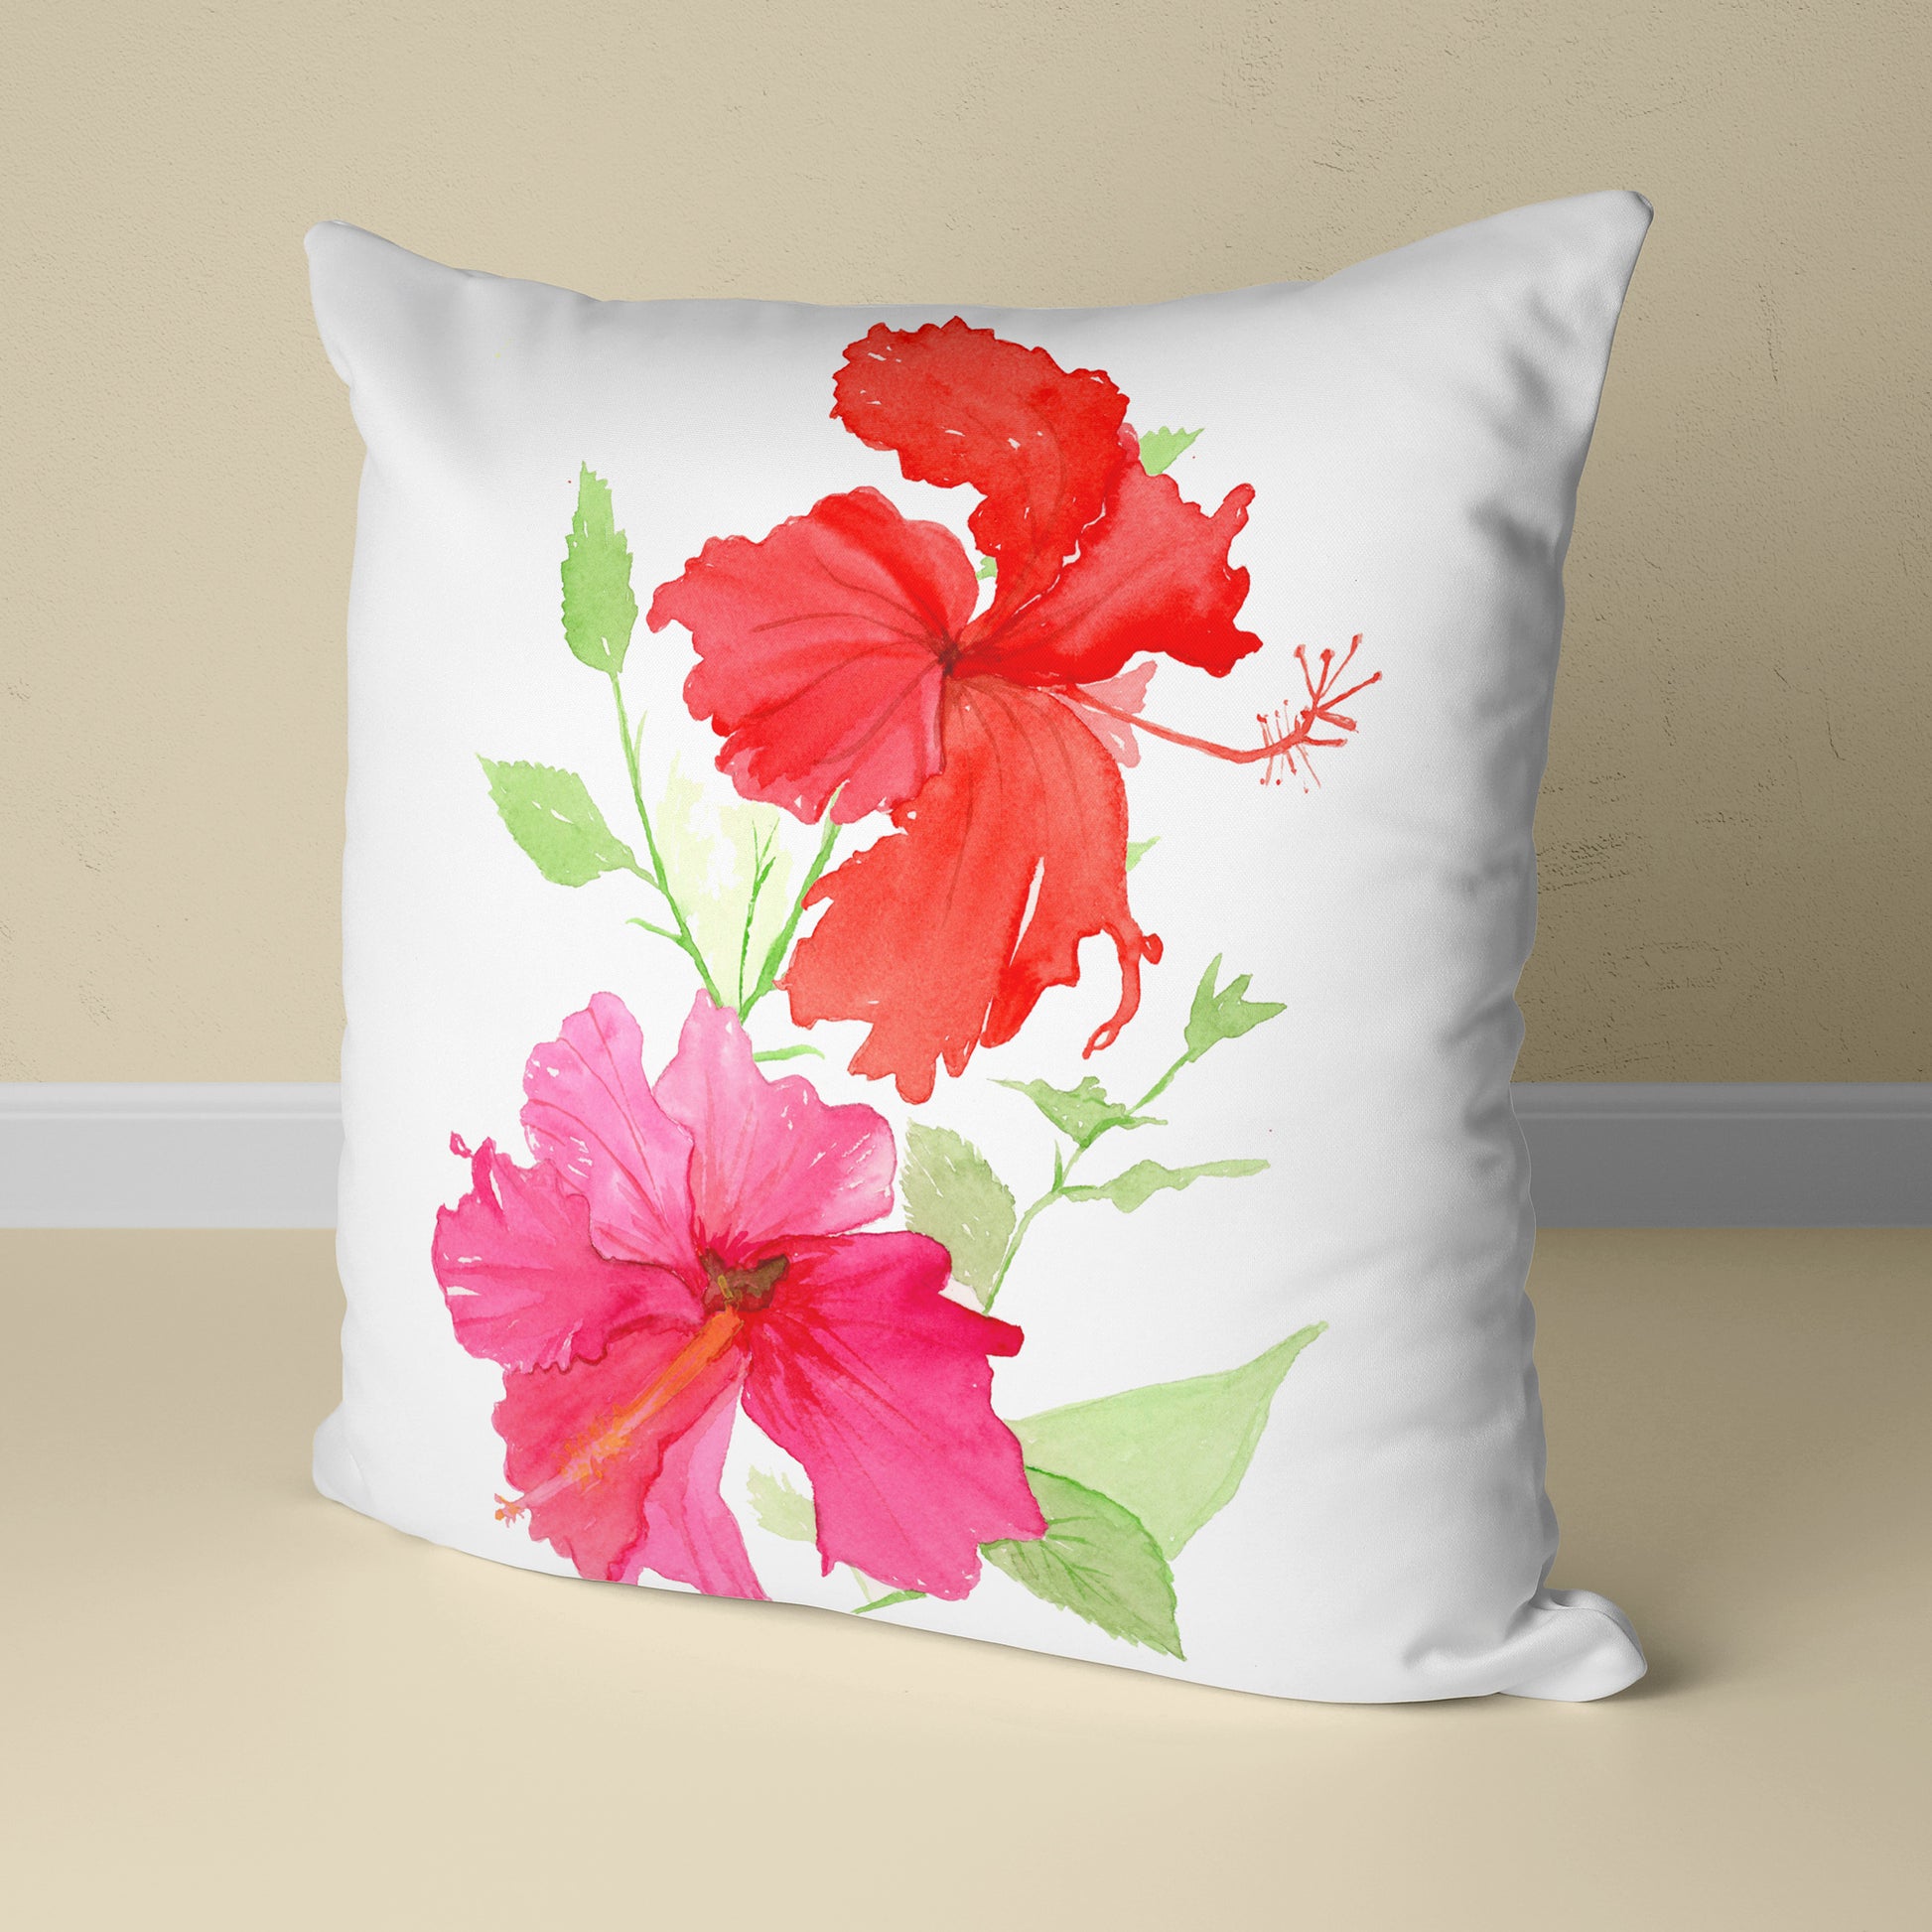 Tropical Hibiscus 16x16 Pillow - Flamingo Shores - Original Art for Home Decor and Gifts